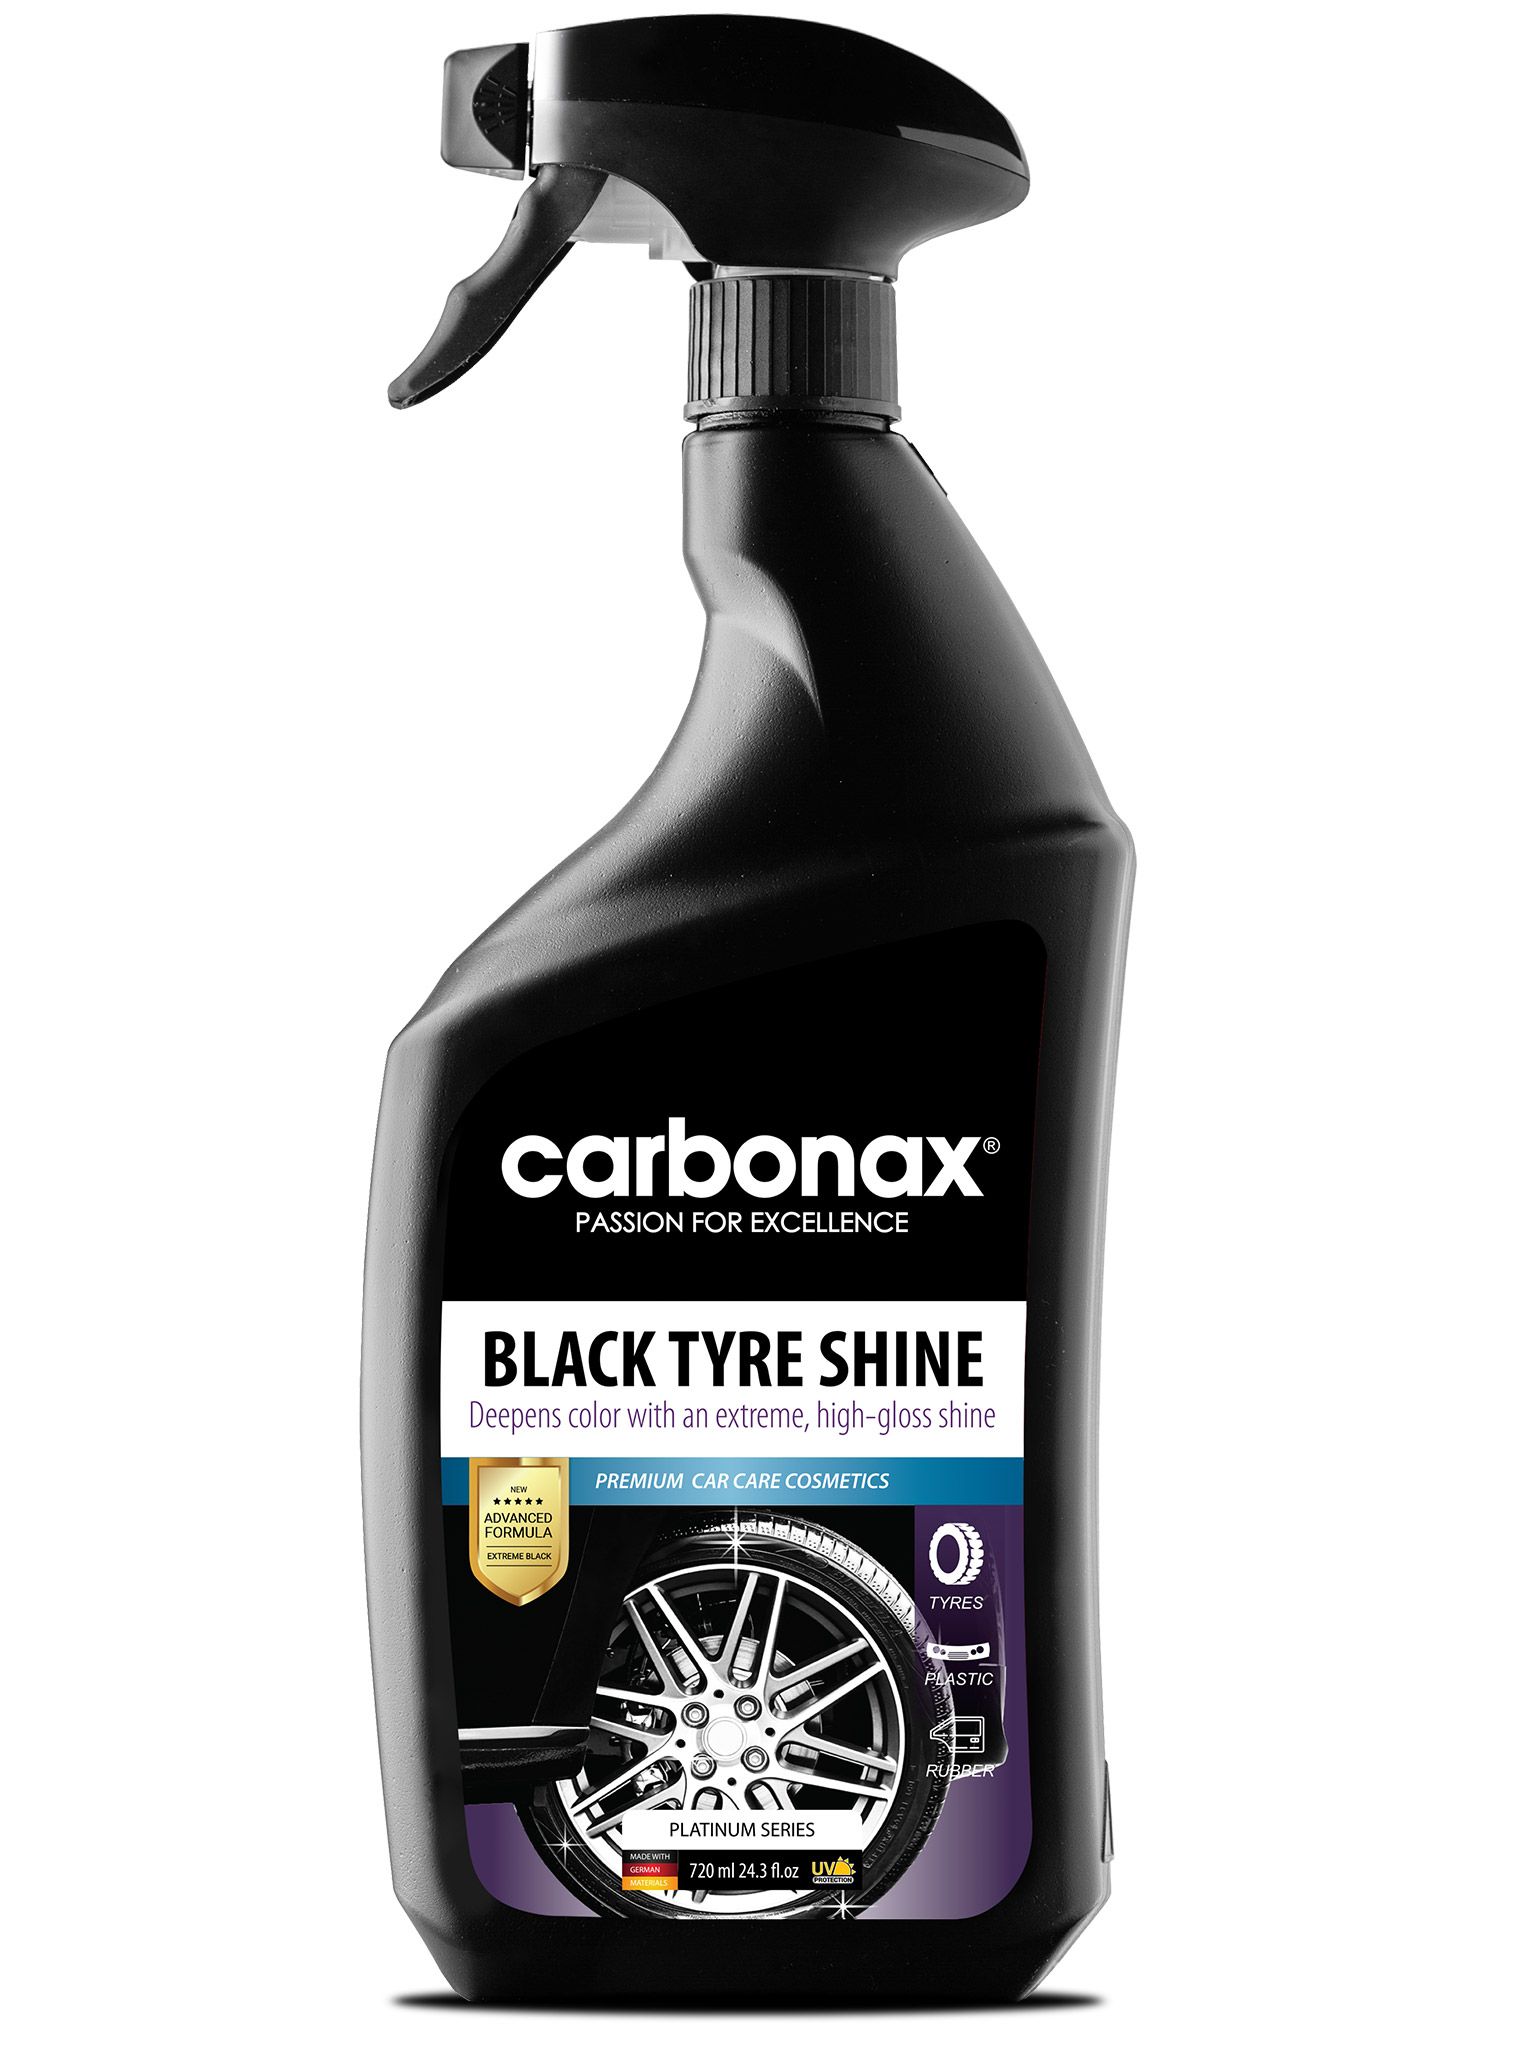 Carbonax "Black Tyre Shine"